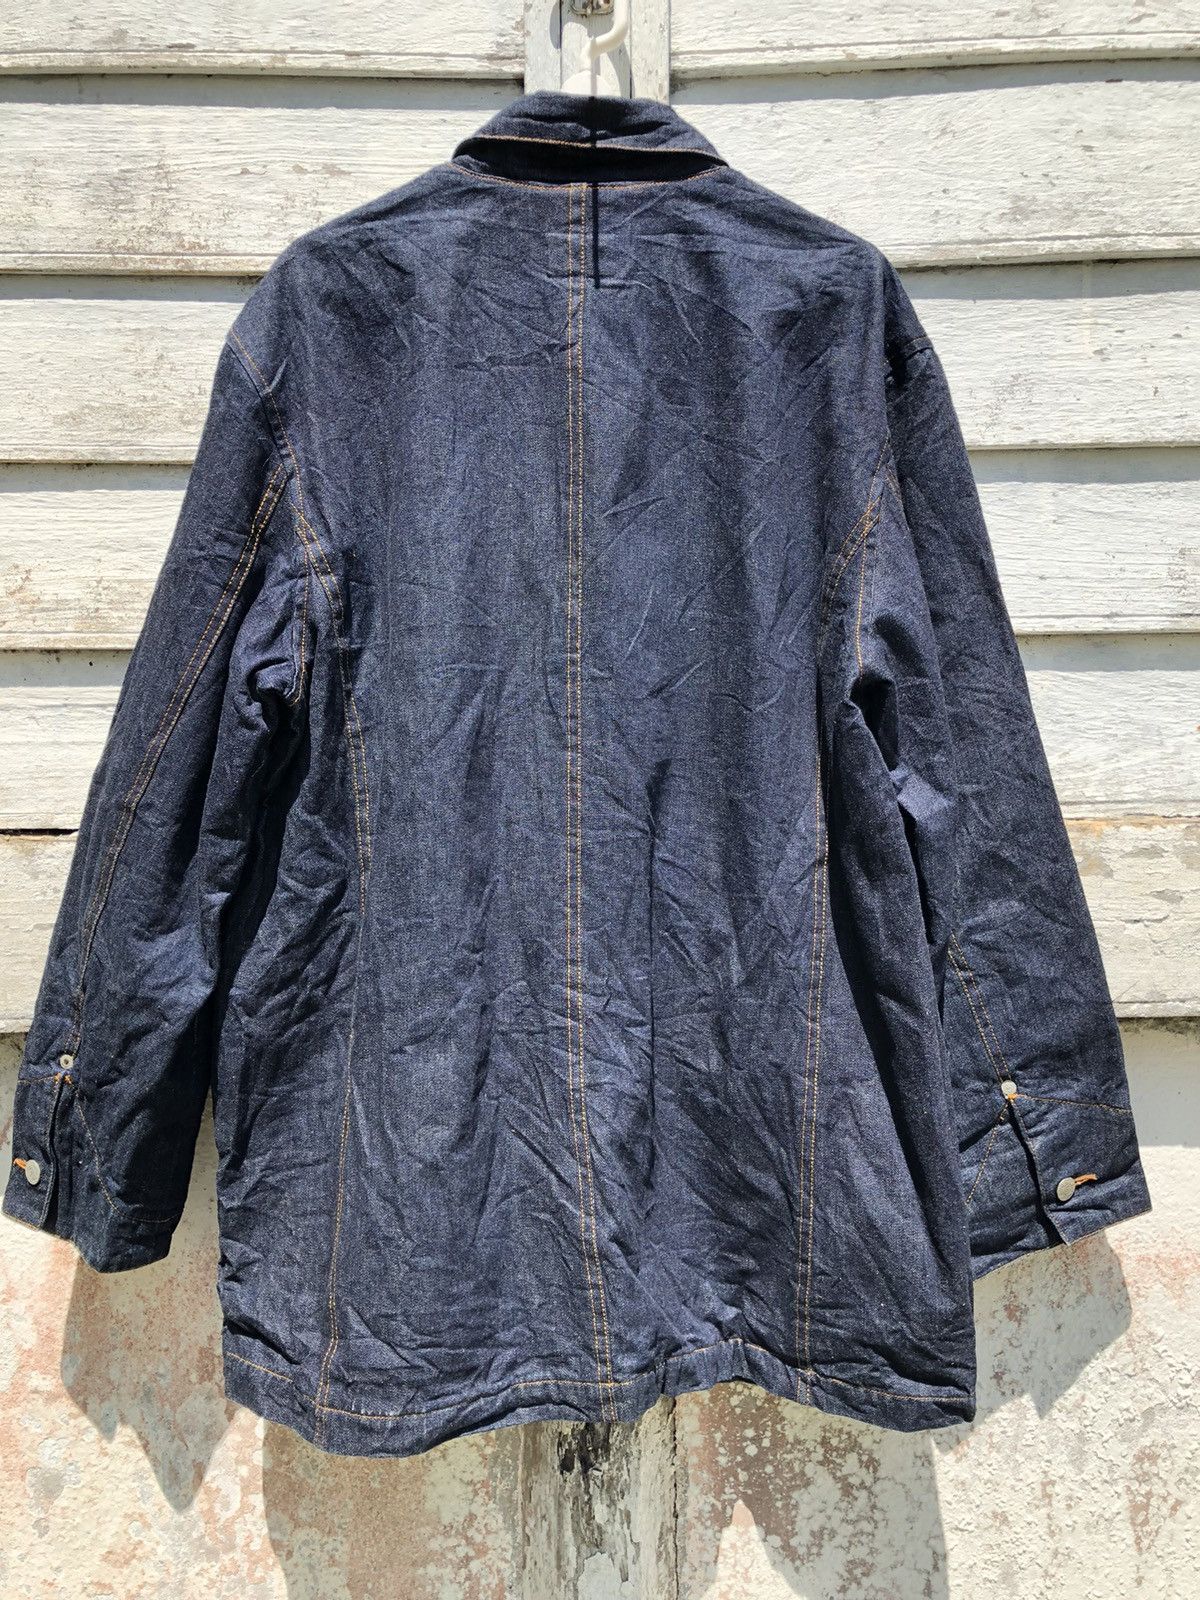 Japanese Brand - Let it Ride 20oz Denim Jacket Cotton Lining - 4